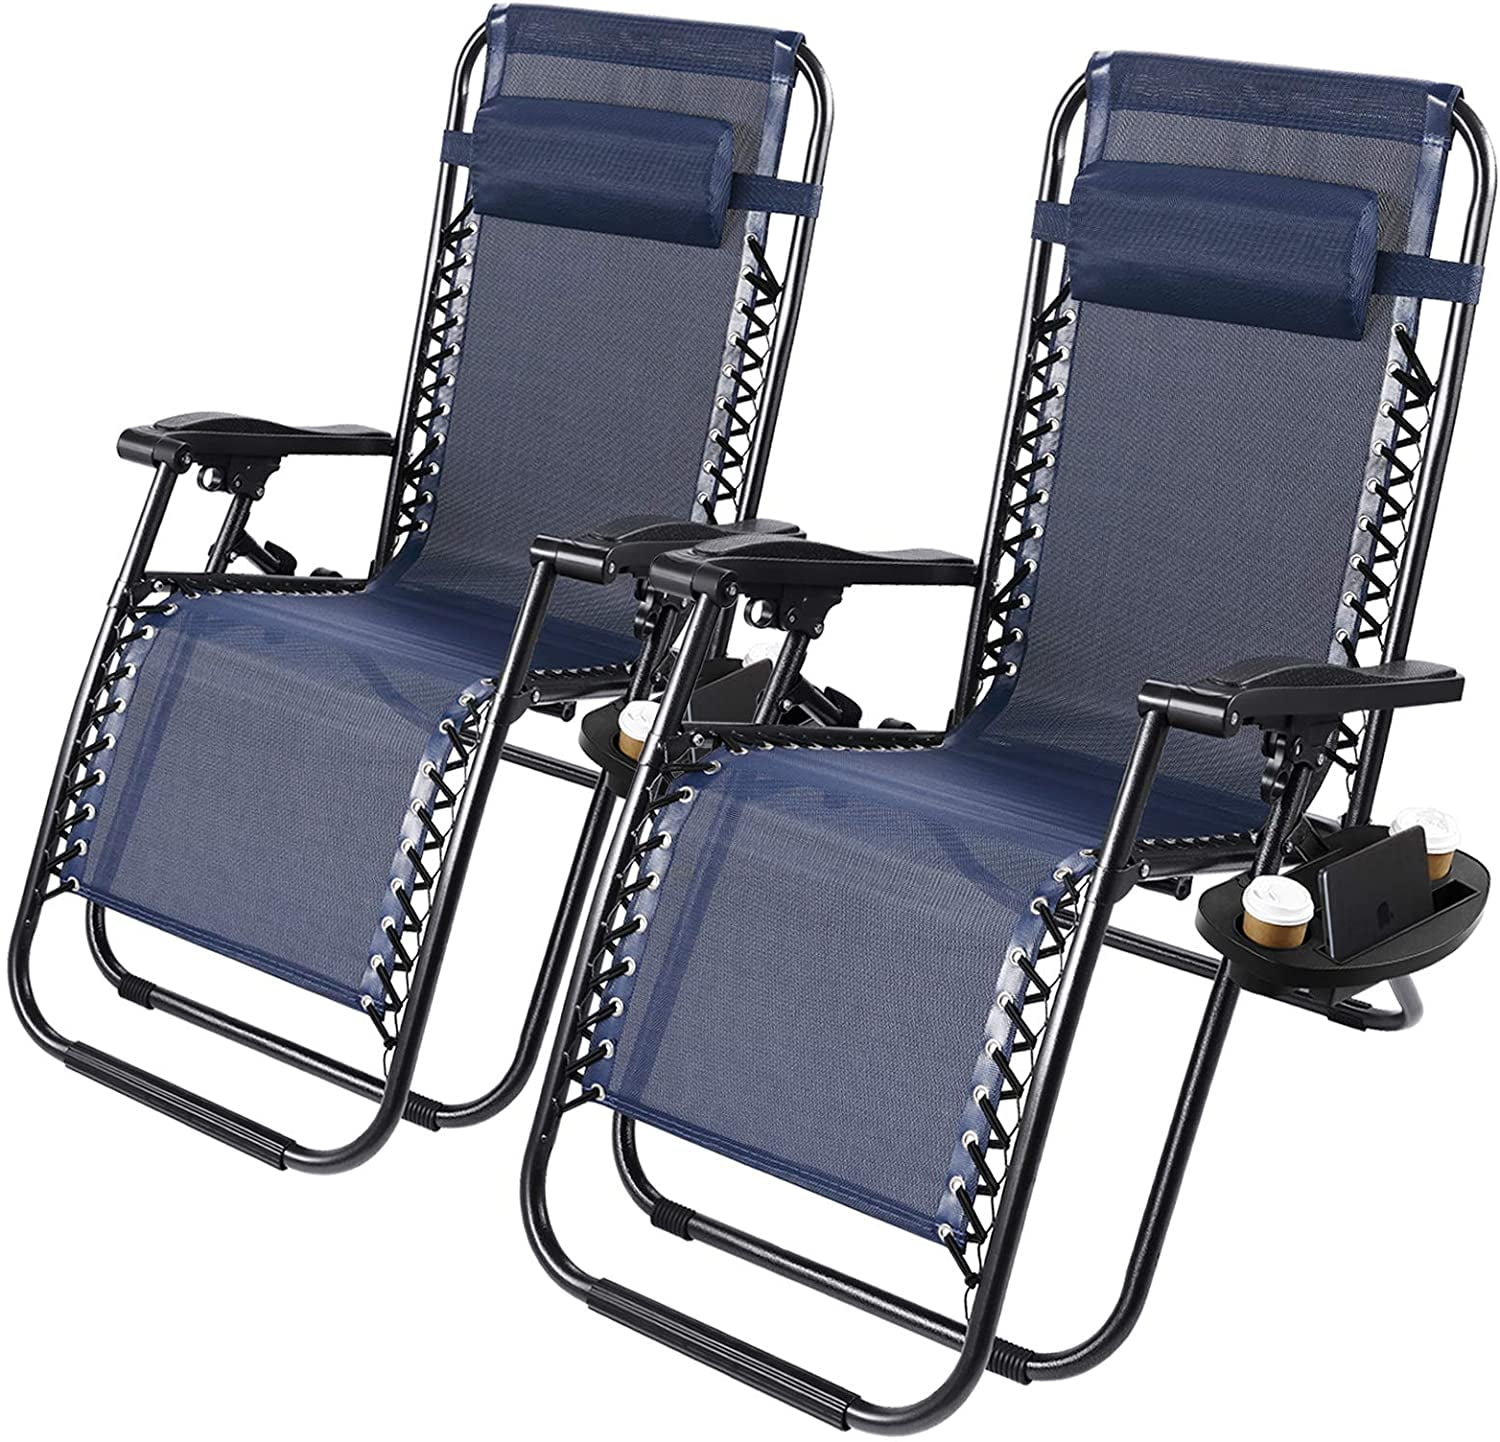 Details about   Navy Blue Folding Zero Gravity Recline Chairs Outdoor Beach Patio Yard  2pcs 